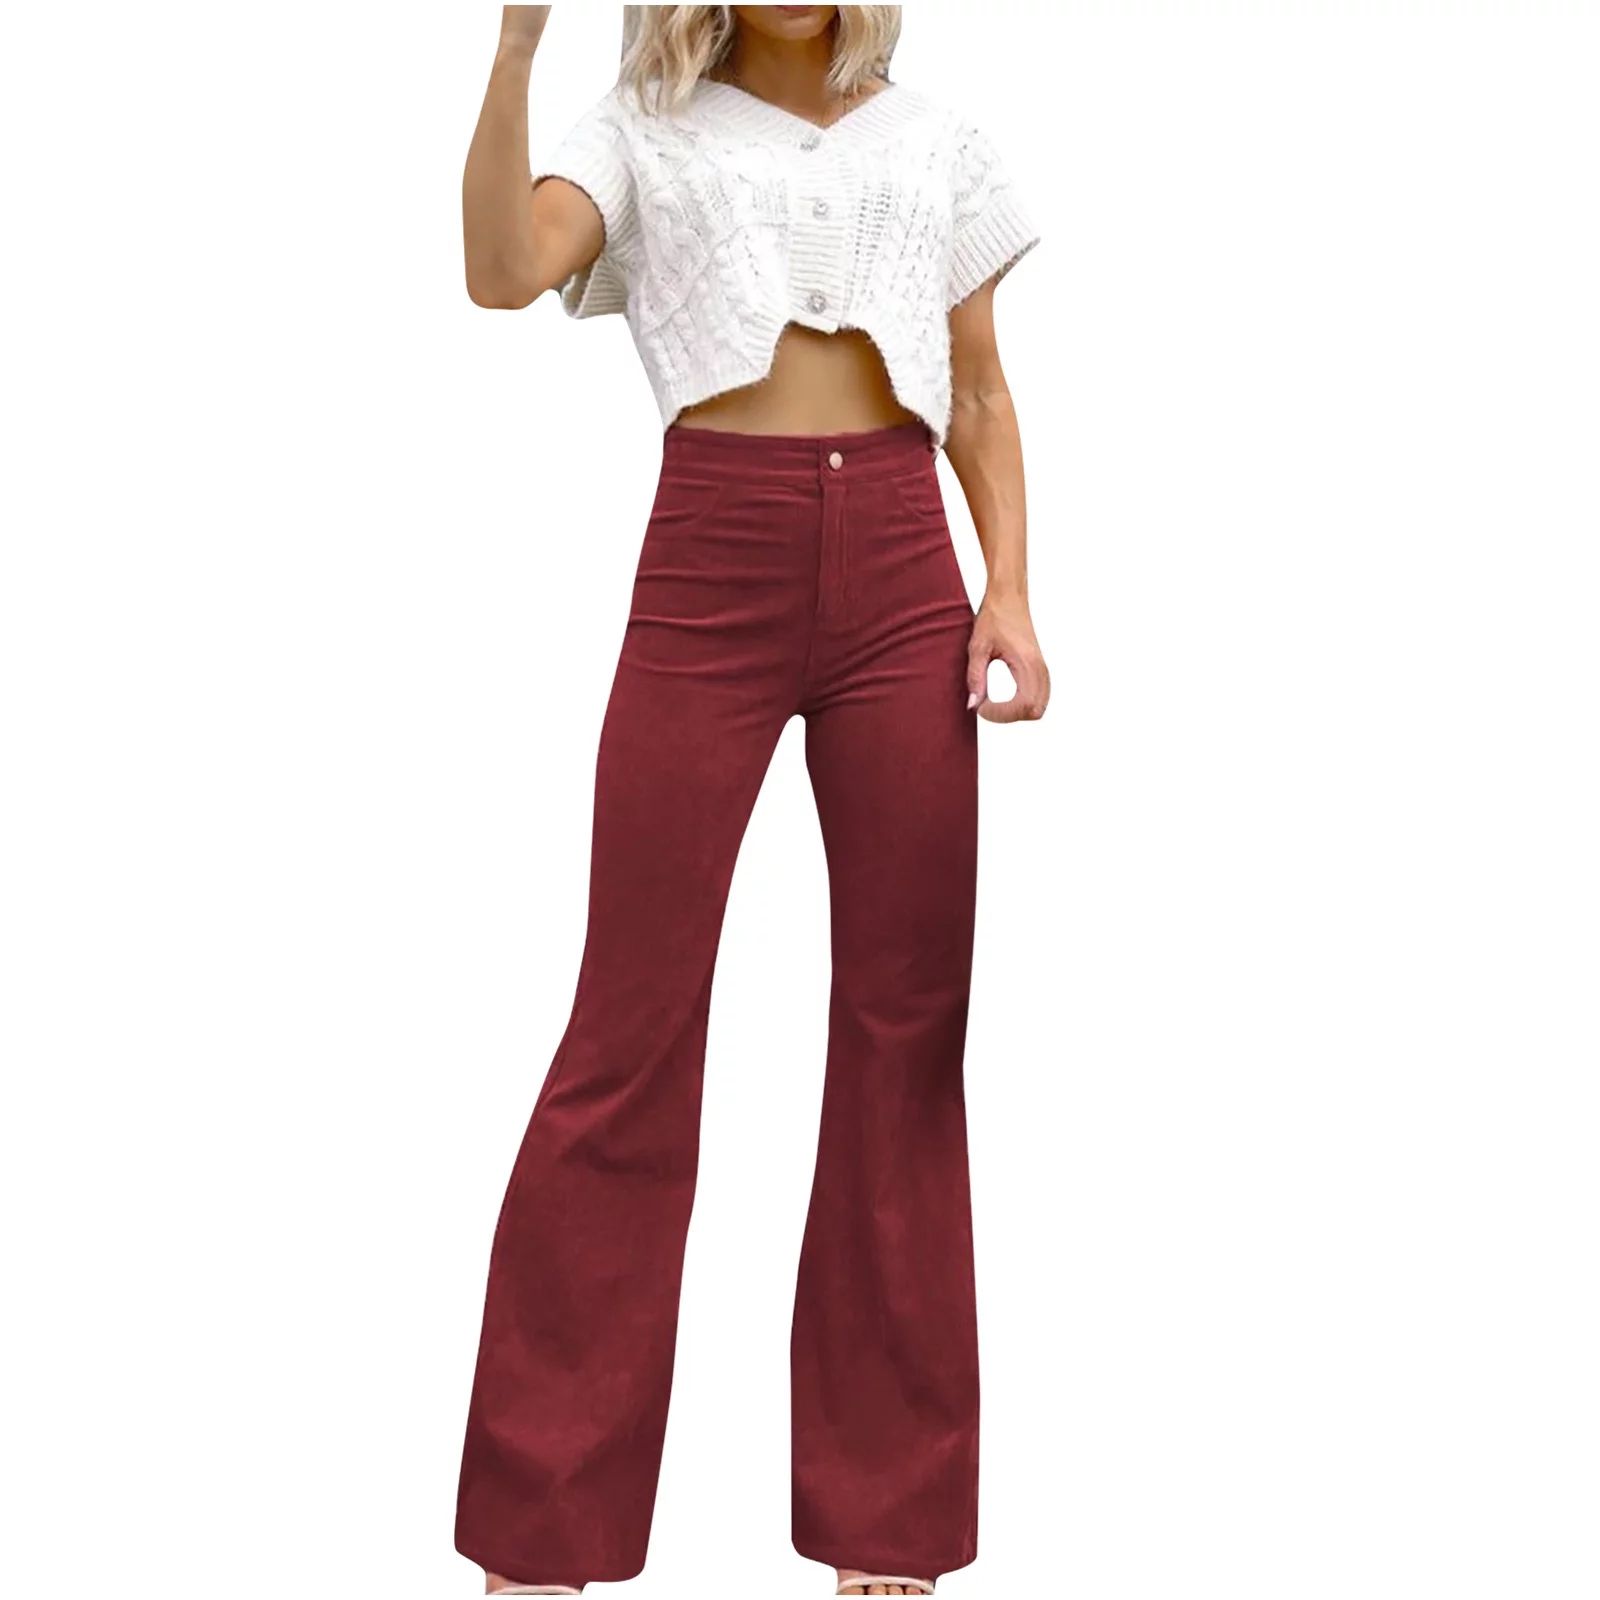 Hfyihgf Women Elegant Corduroy Flare Pants Elastic High Waist Vintage Bell Bottom Trousers with P... | Walmart (US)